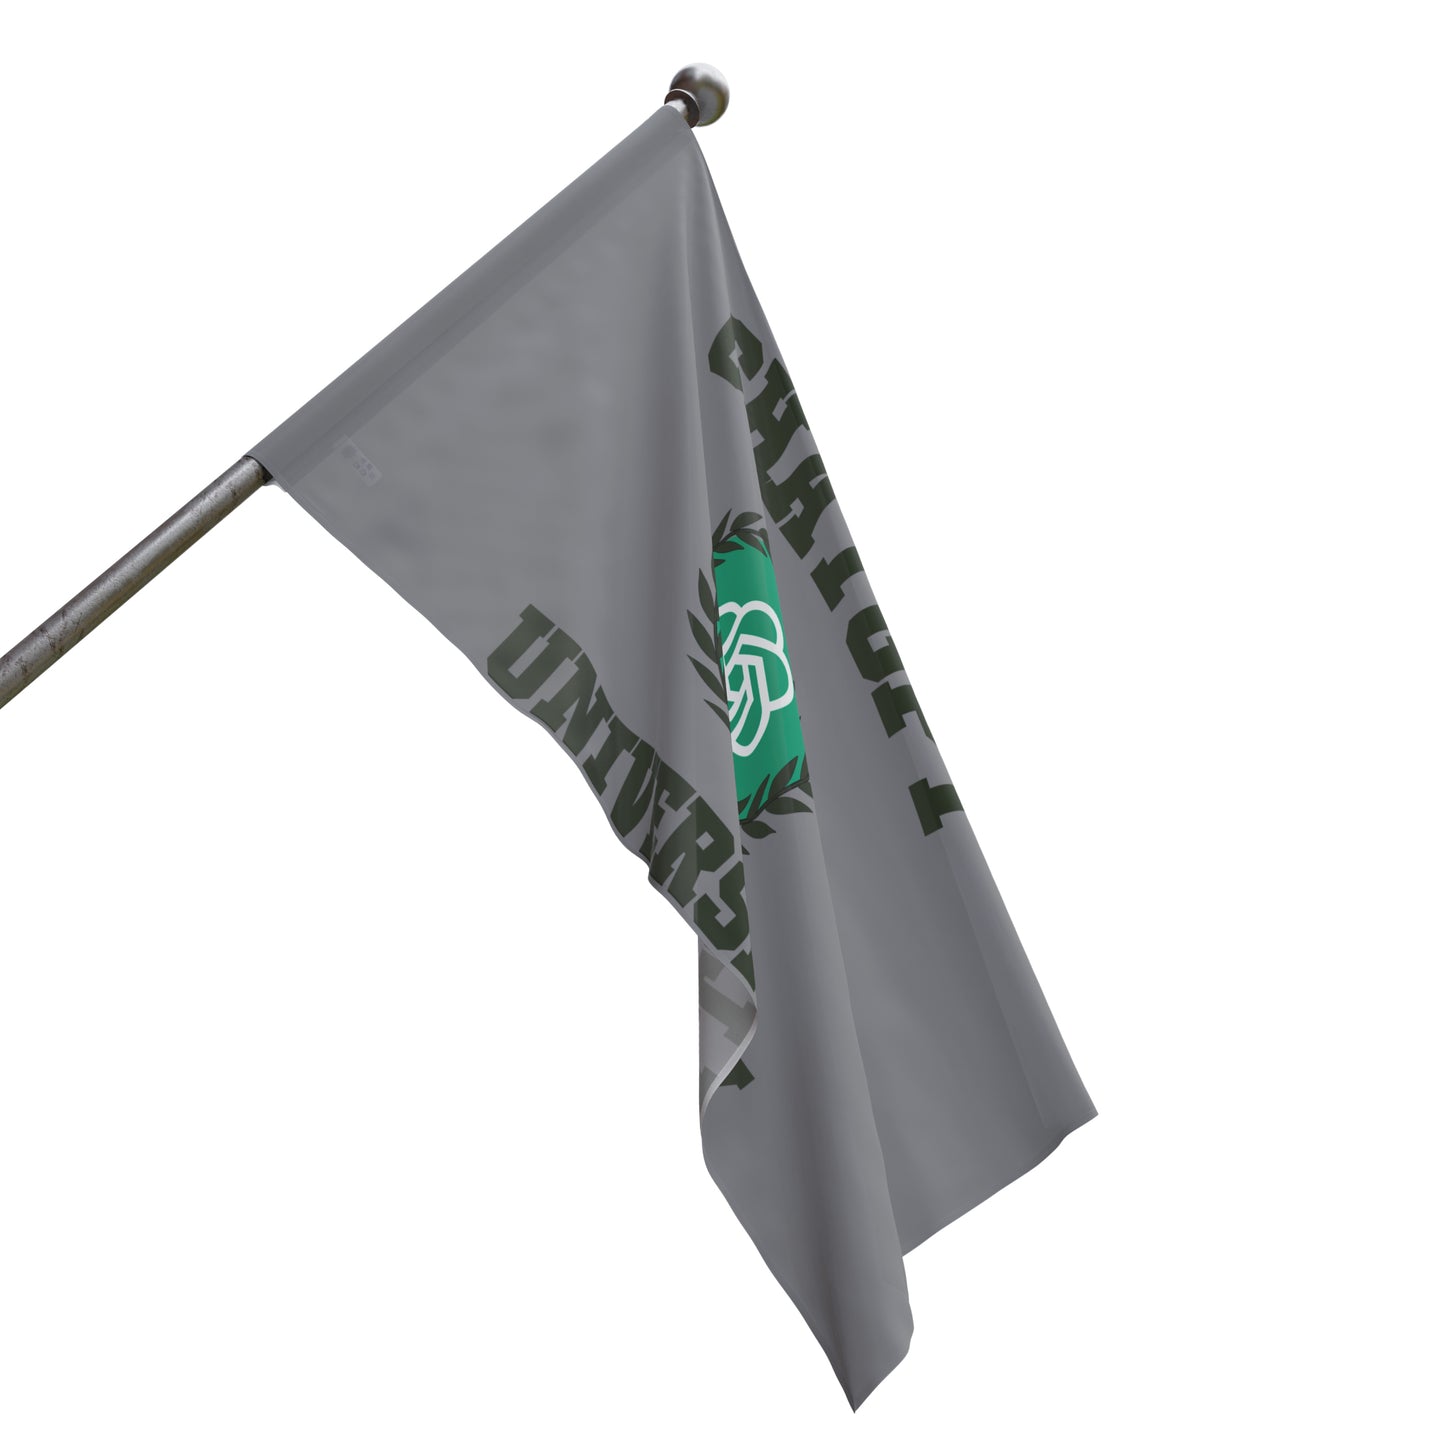 ChatGPT University - Flag